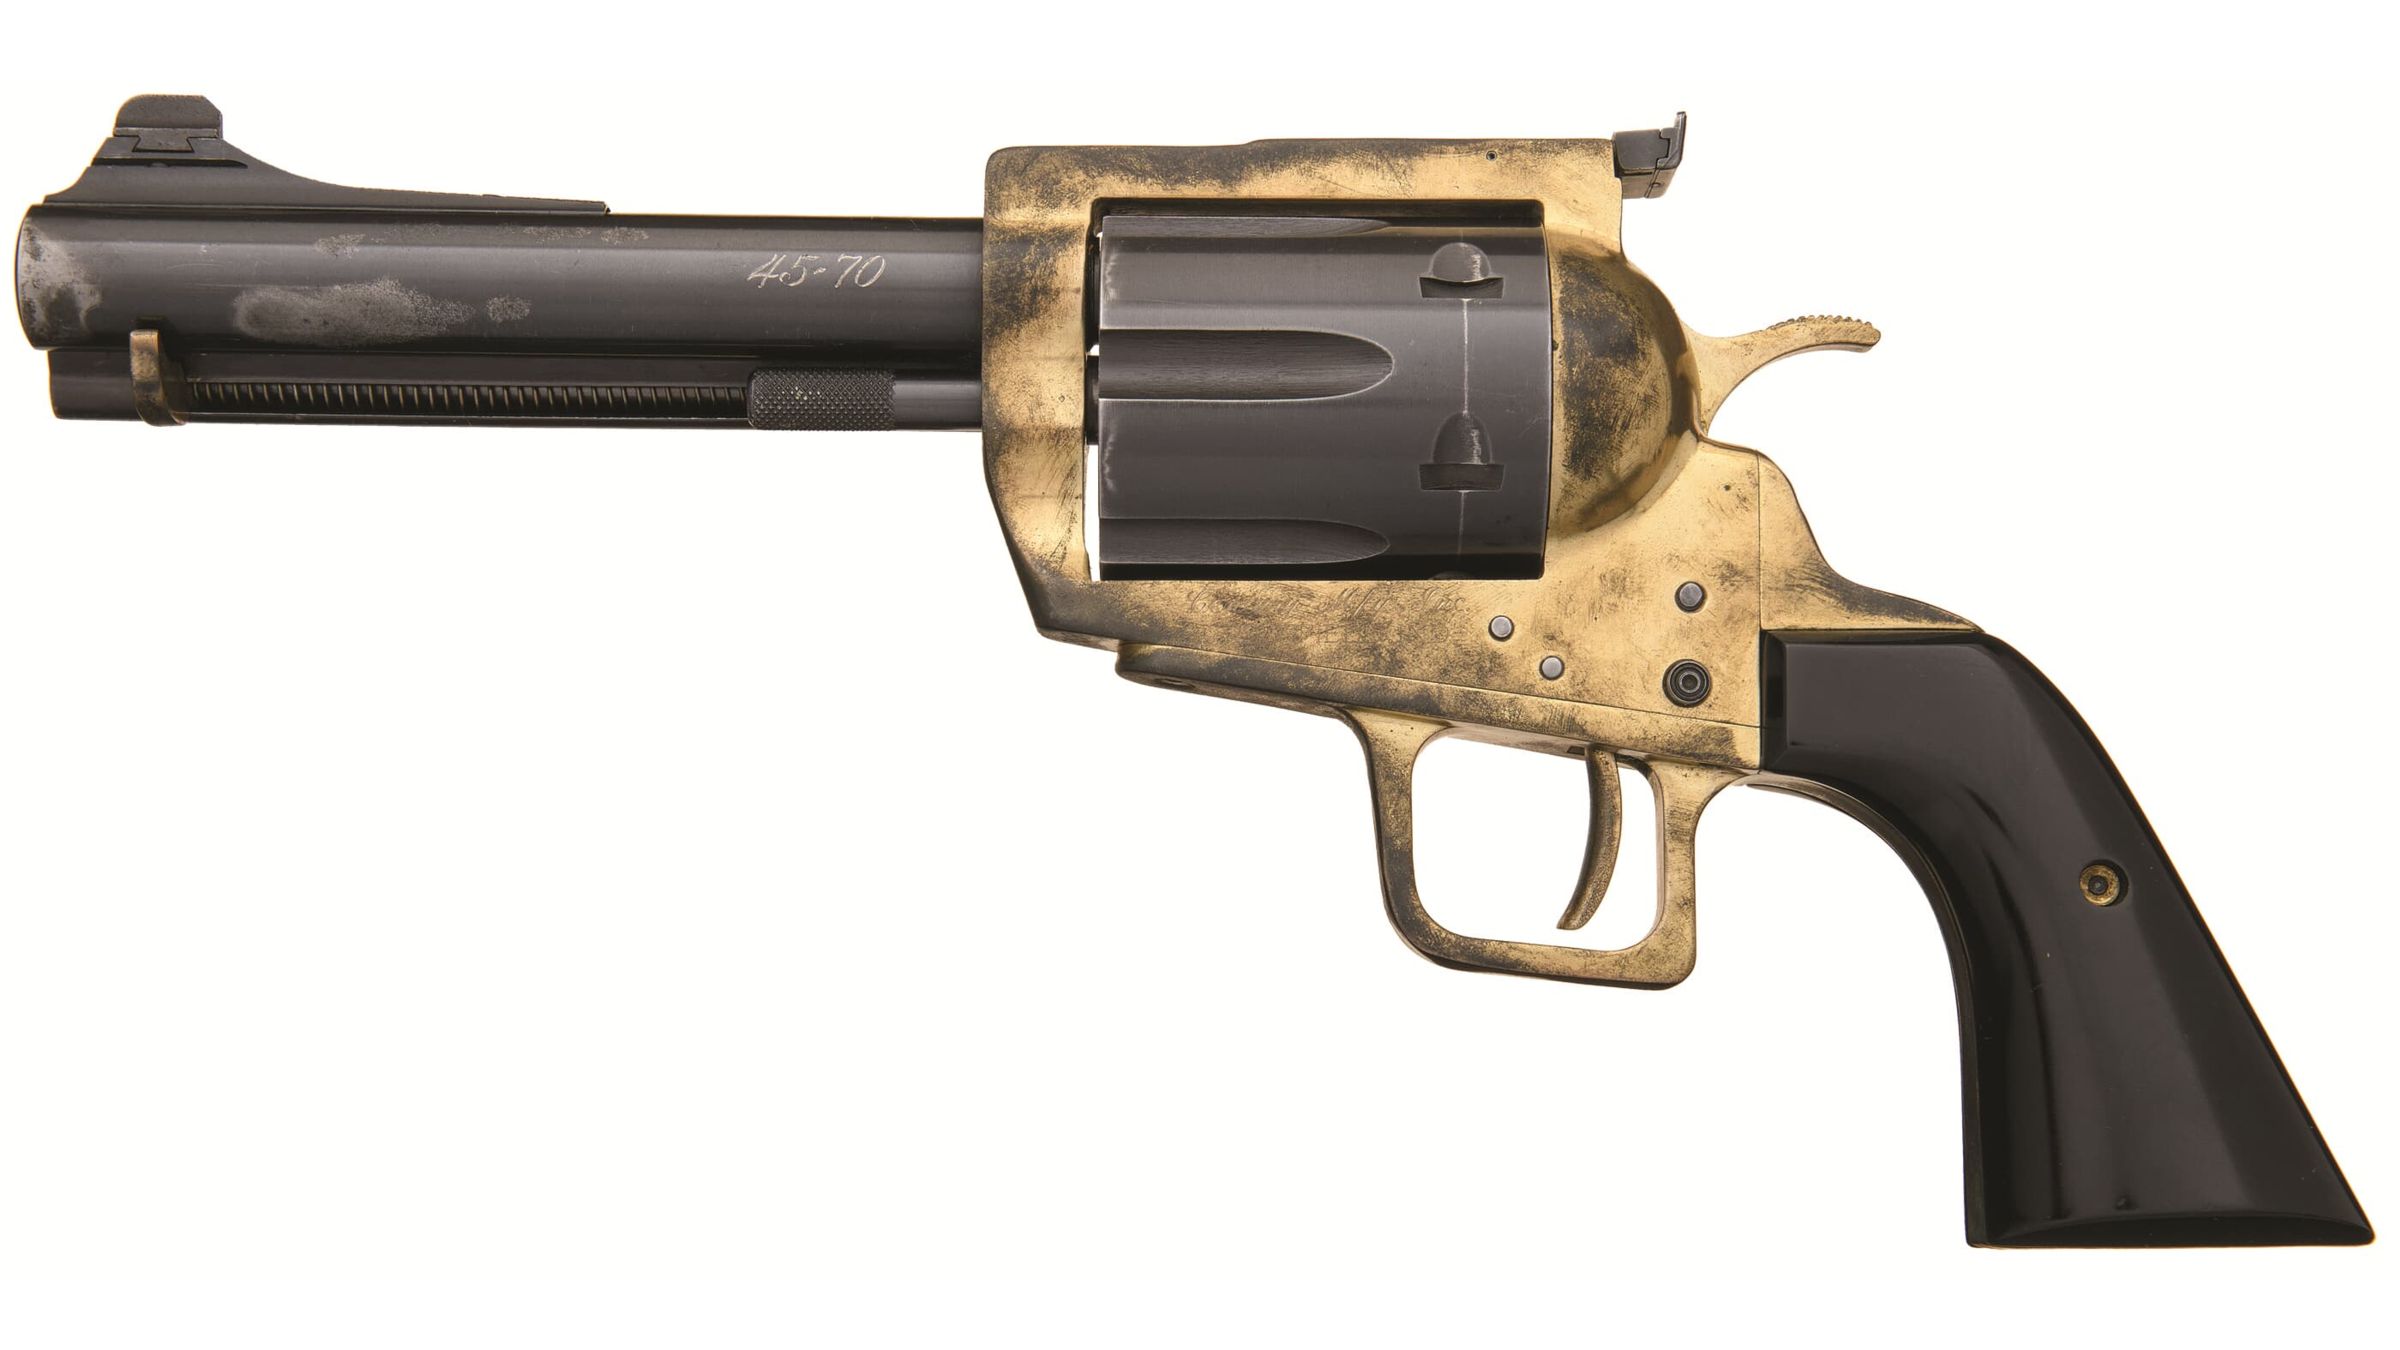 Century Mfg. Inc. Model 100 .45-70 Revolver with Holster Rig